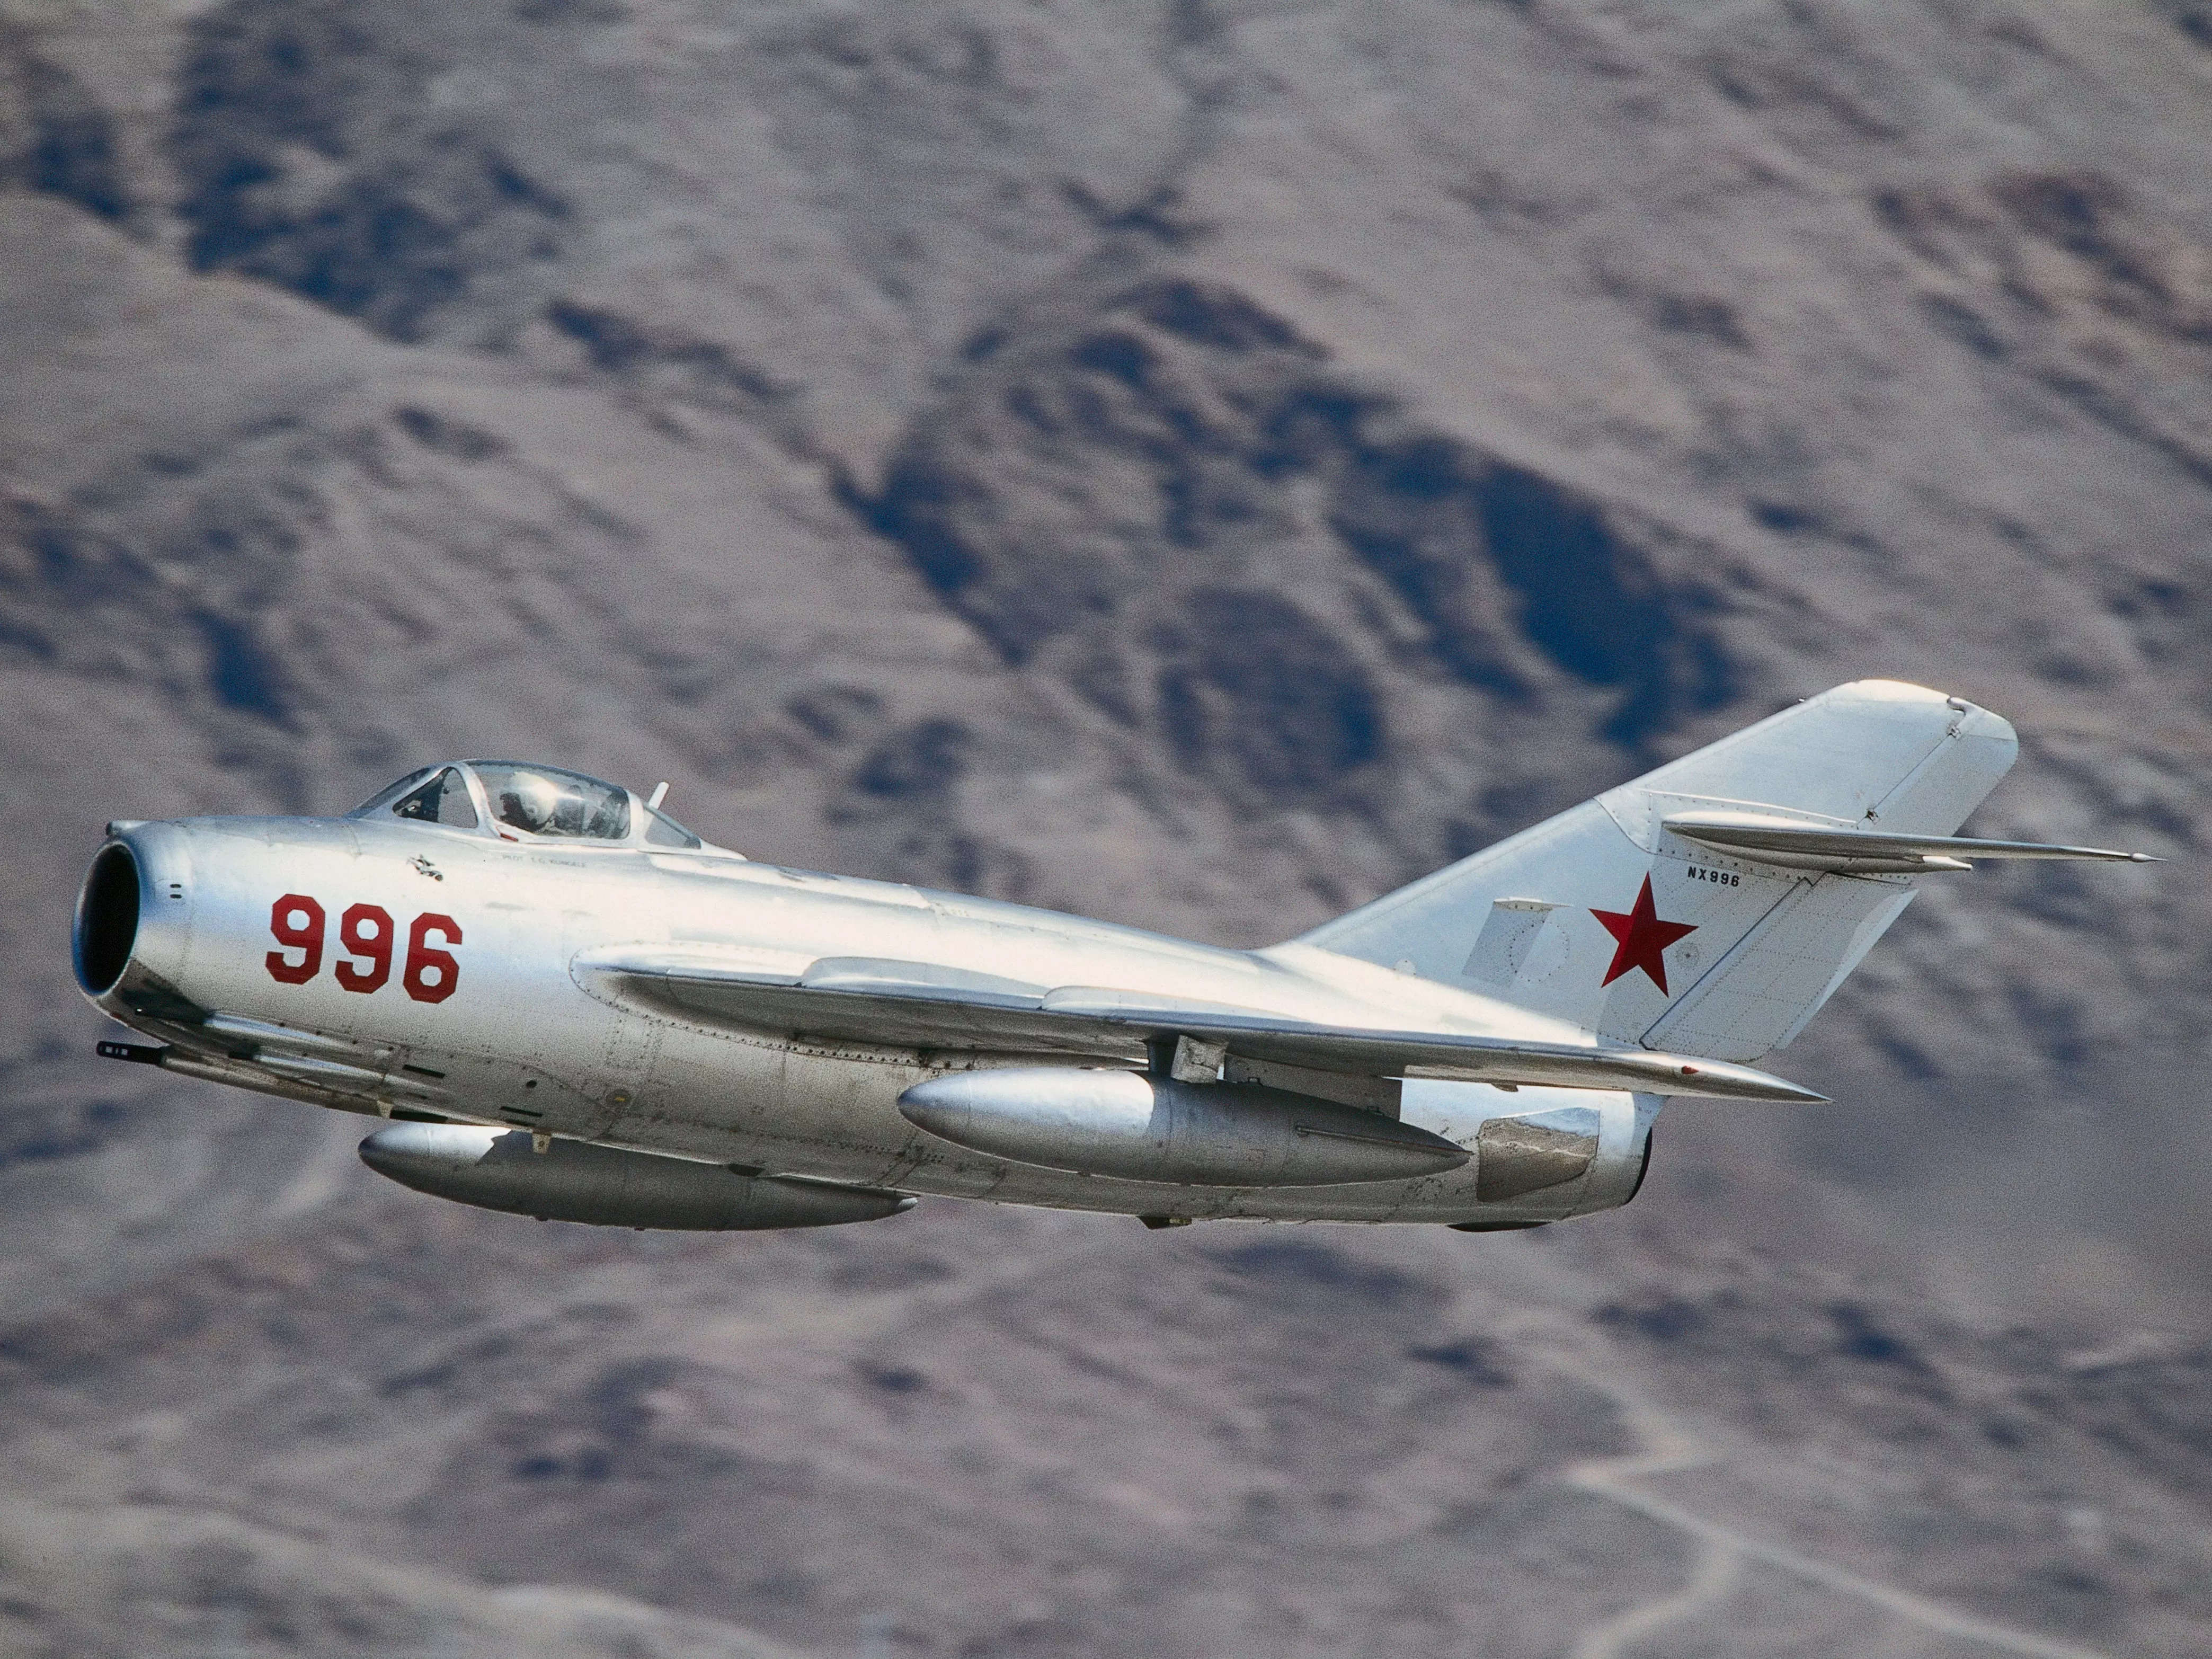 A Soviet Union MiG-15.